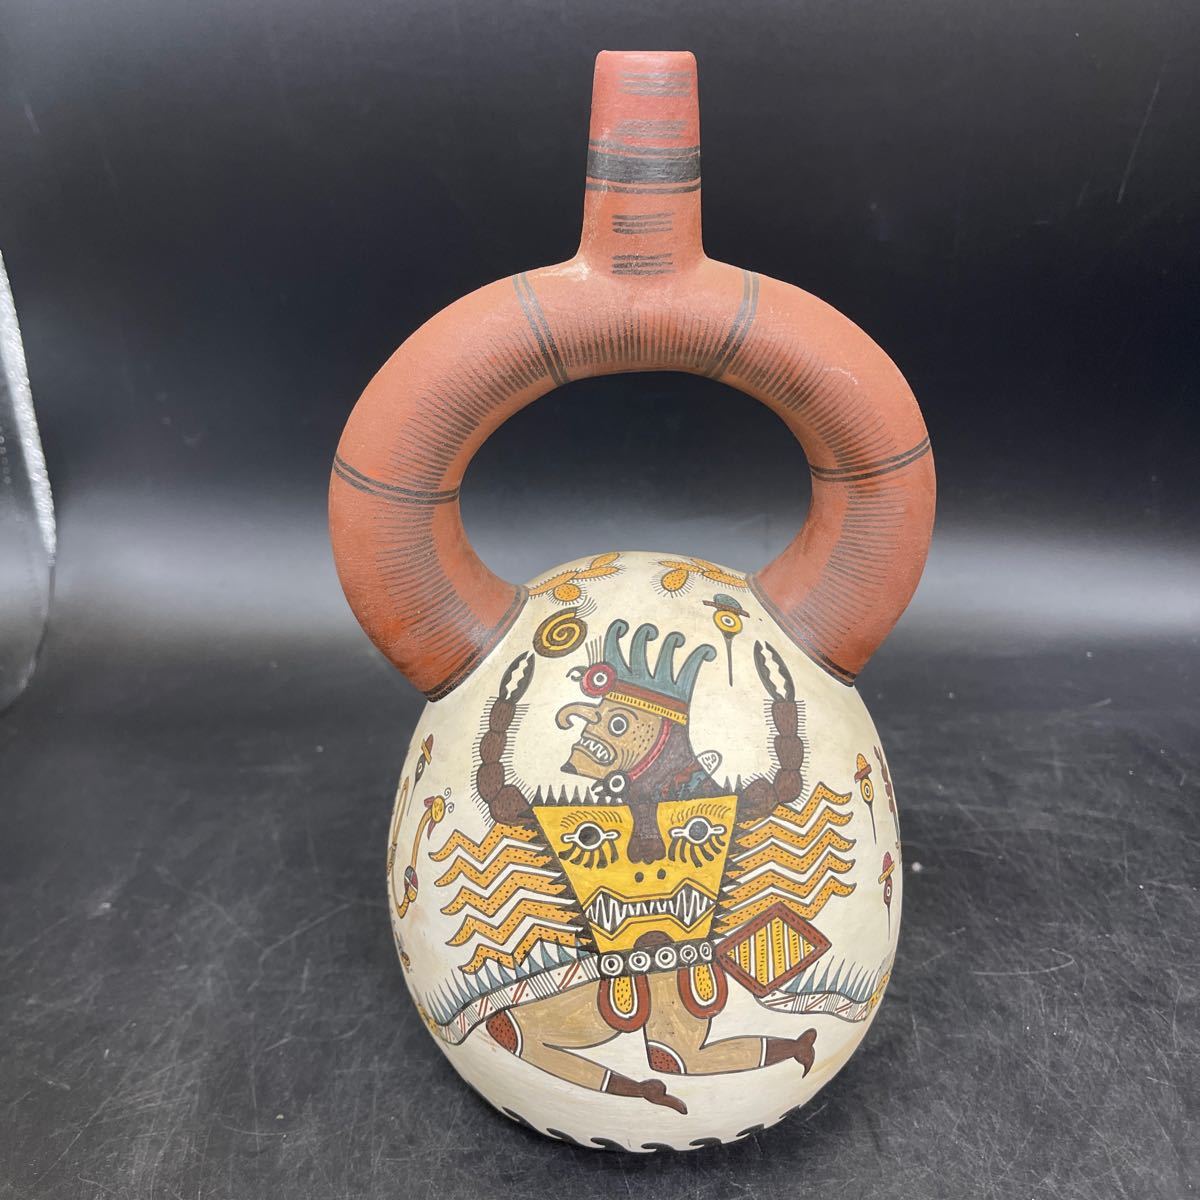 B12211706 ペルー モチェ文化土器 鐙型注口土器 インテリア チャビン文化様式から続く鐙形注口を持つ細くすっきりした印象の平底球形の土器_画像1